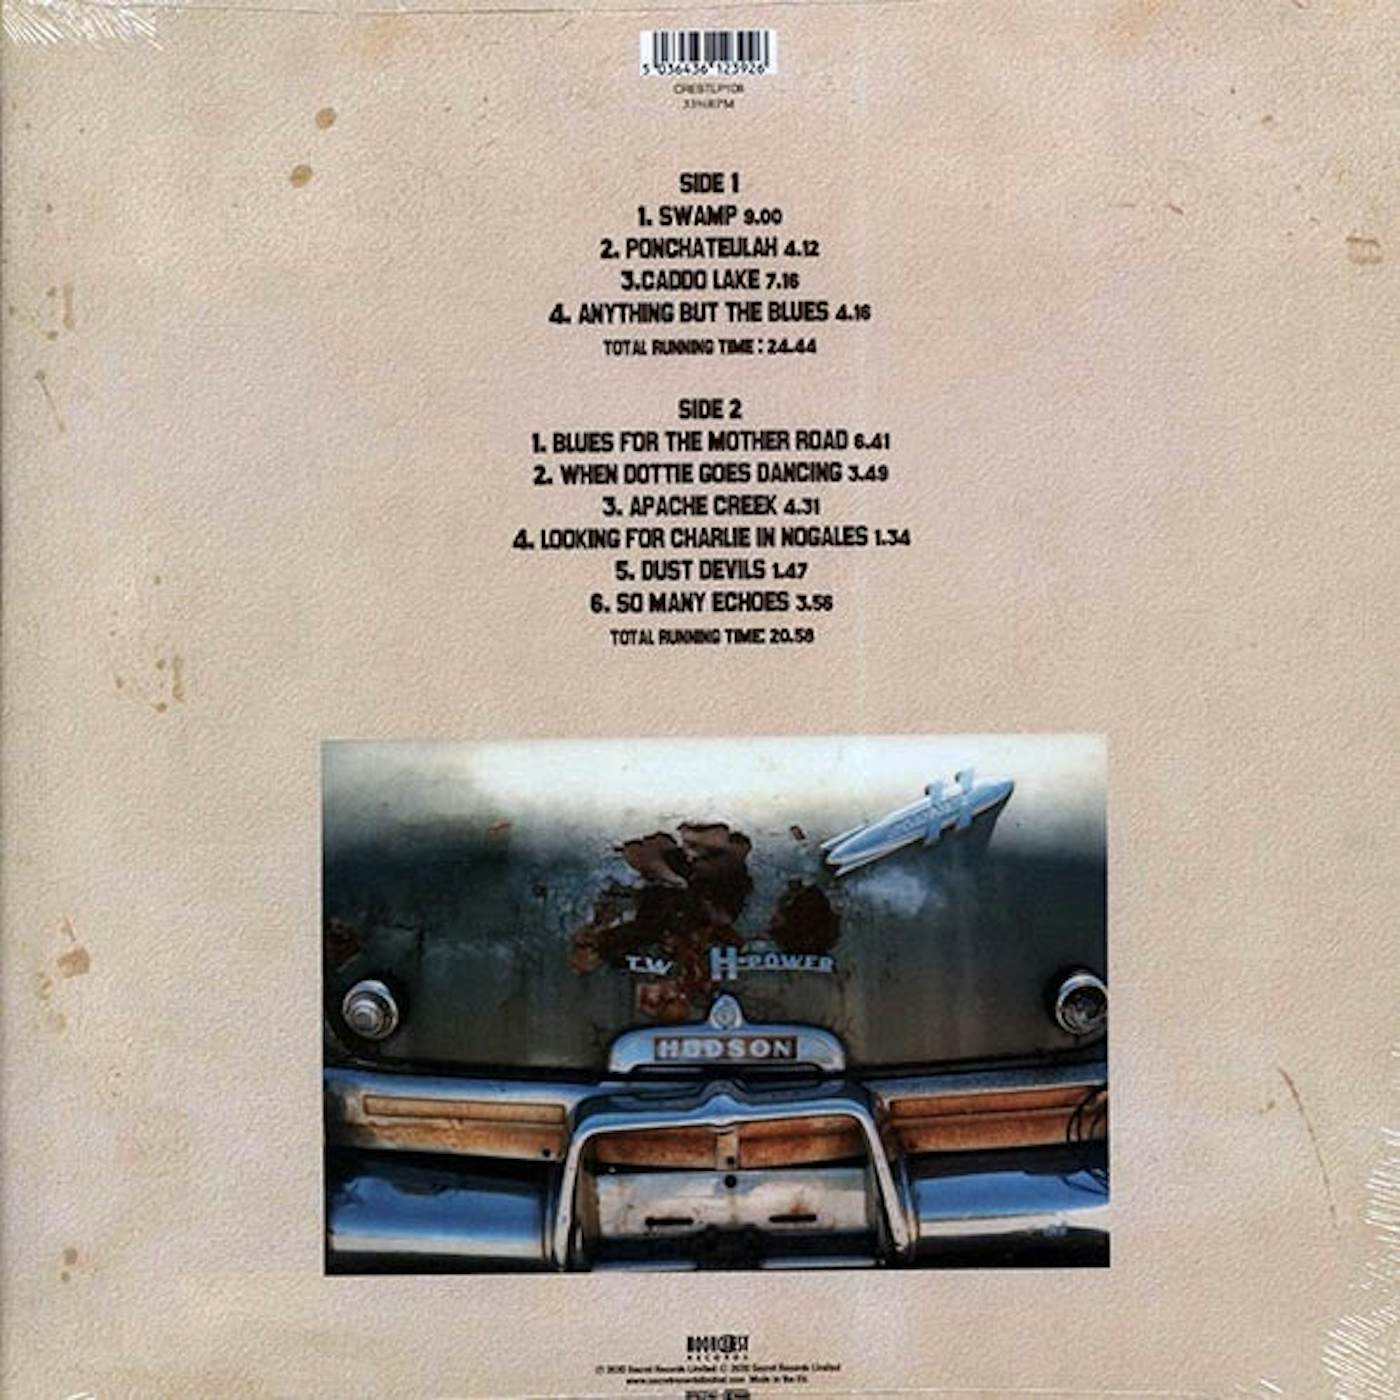 Michael Chapman  LP -  Americana (180g) (Vinyl)